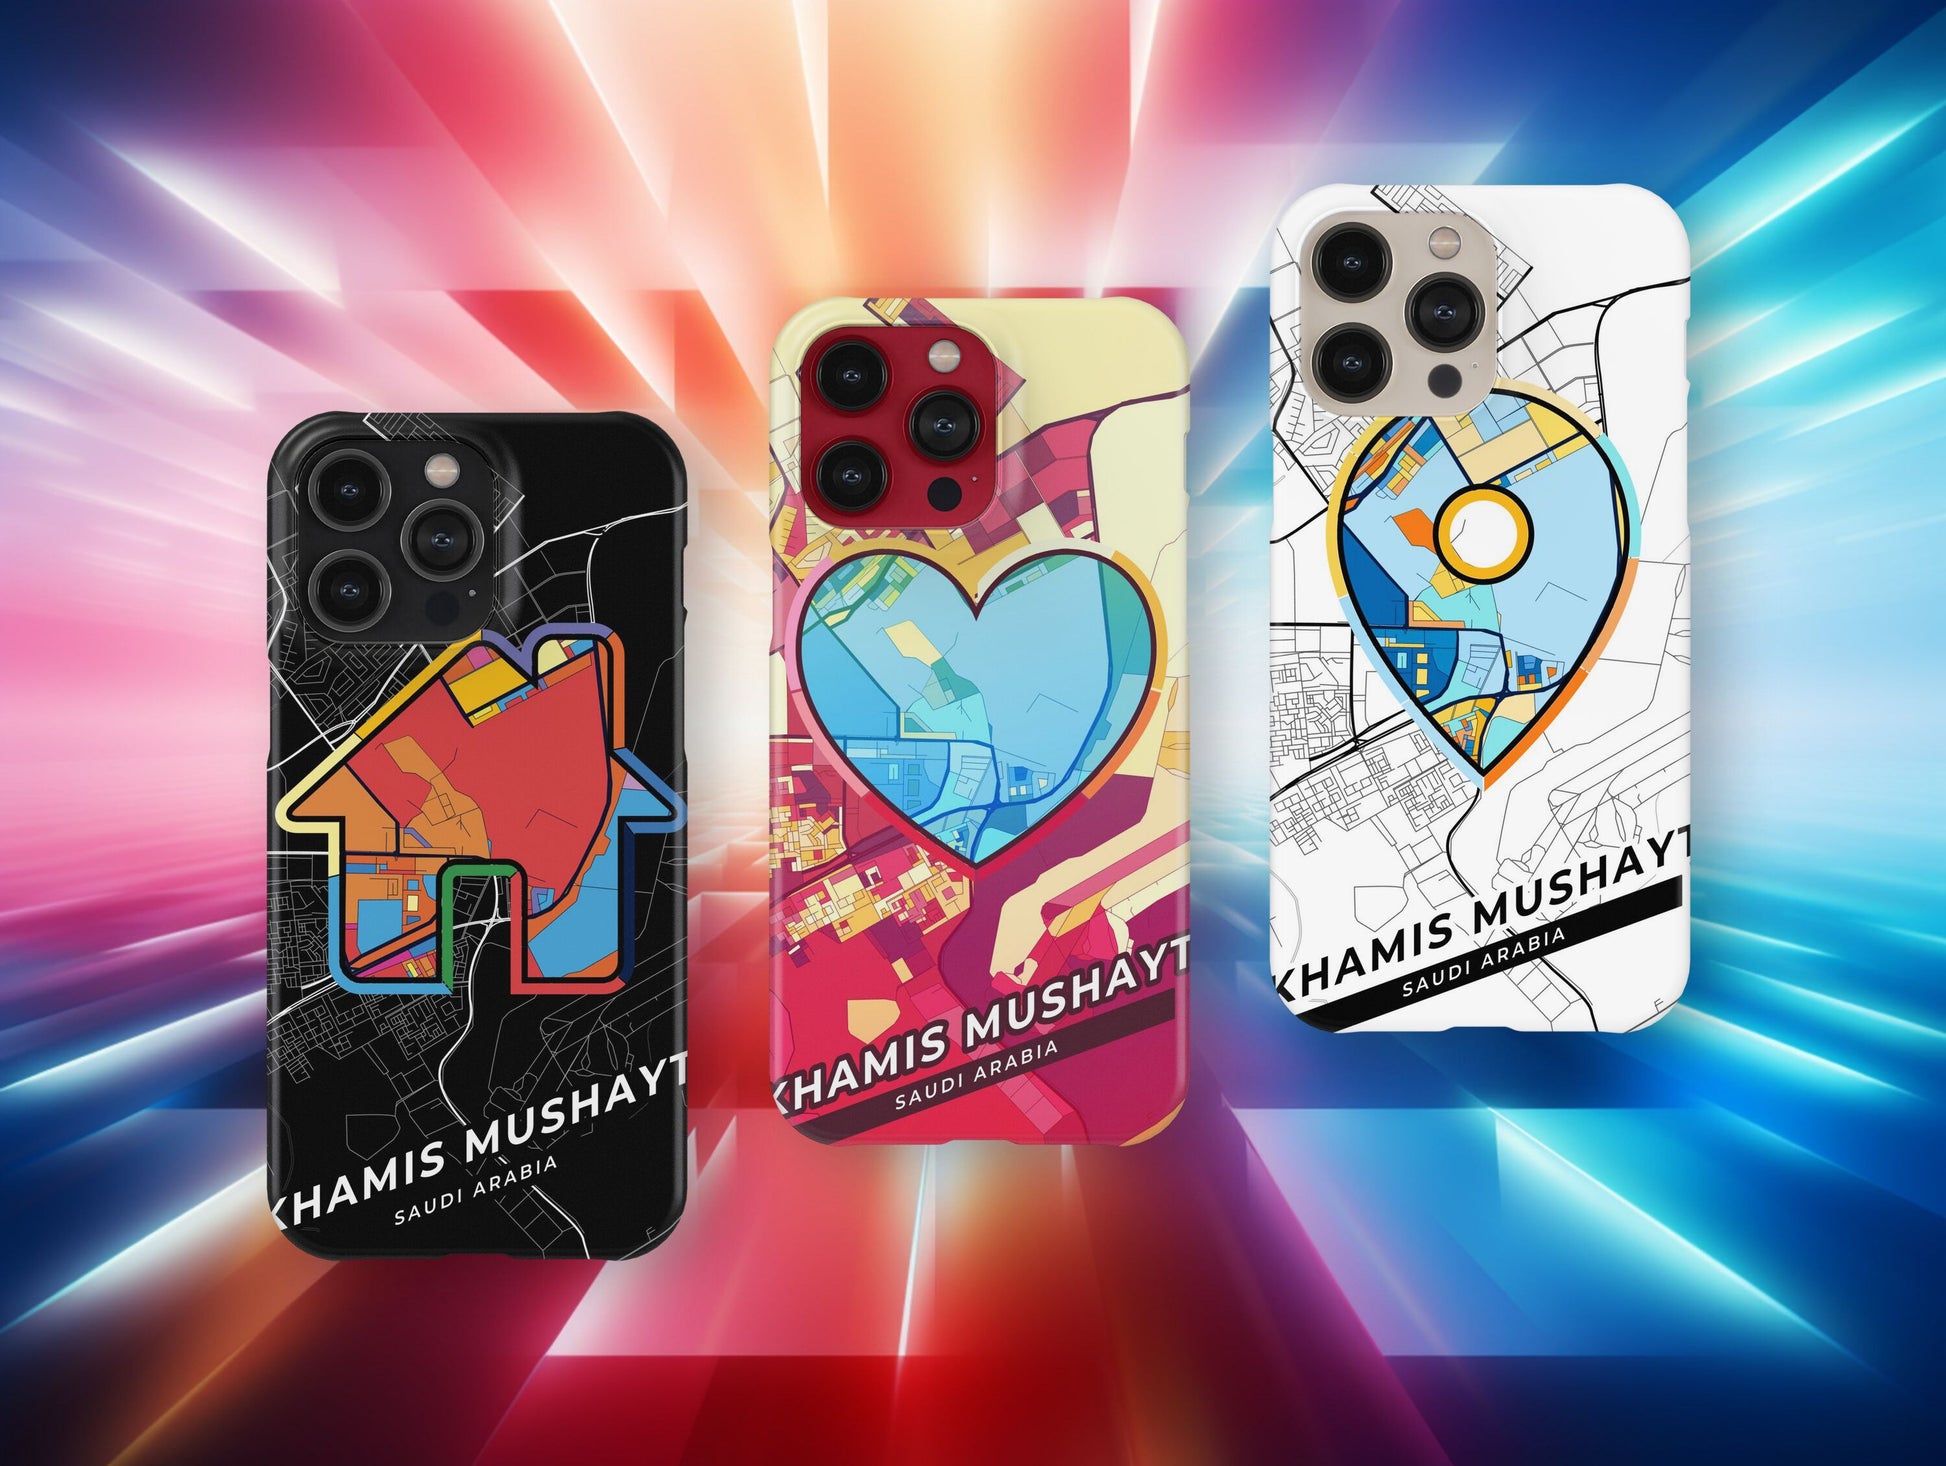 Khamis Mushayt Saudi Arabia slim phone case with colorful icon. Birthday, wedding or housewarming gift. Couple match cases.